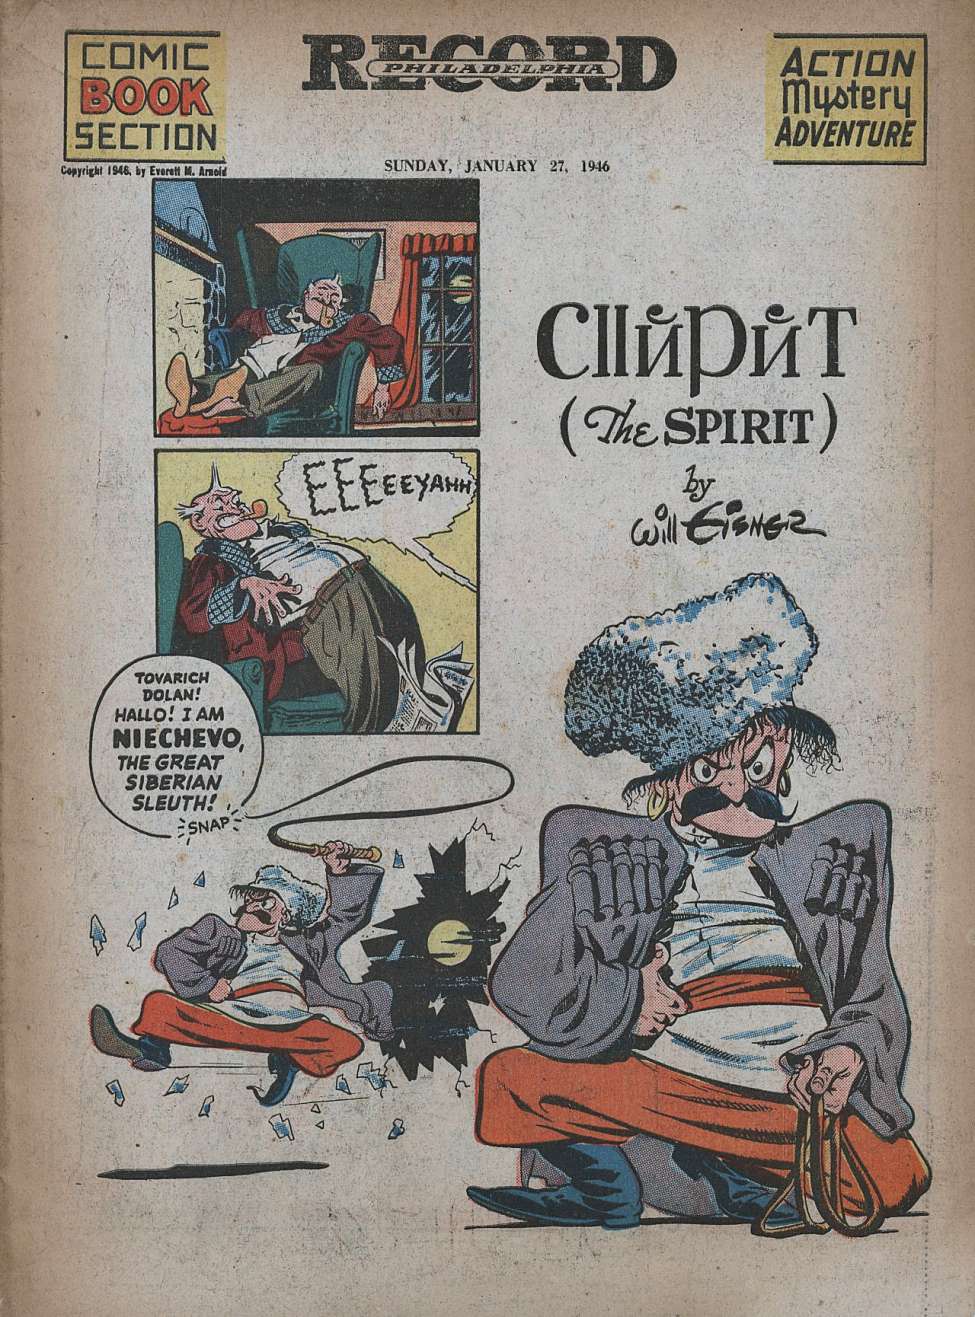 Comic Book Cover For The Spirit (1946-01-27) - Philadelphia Record